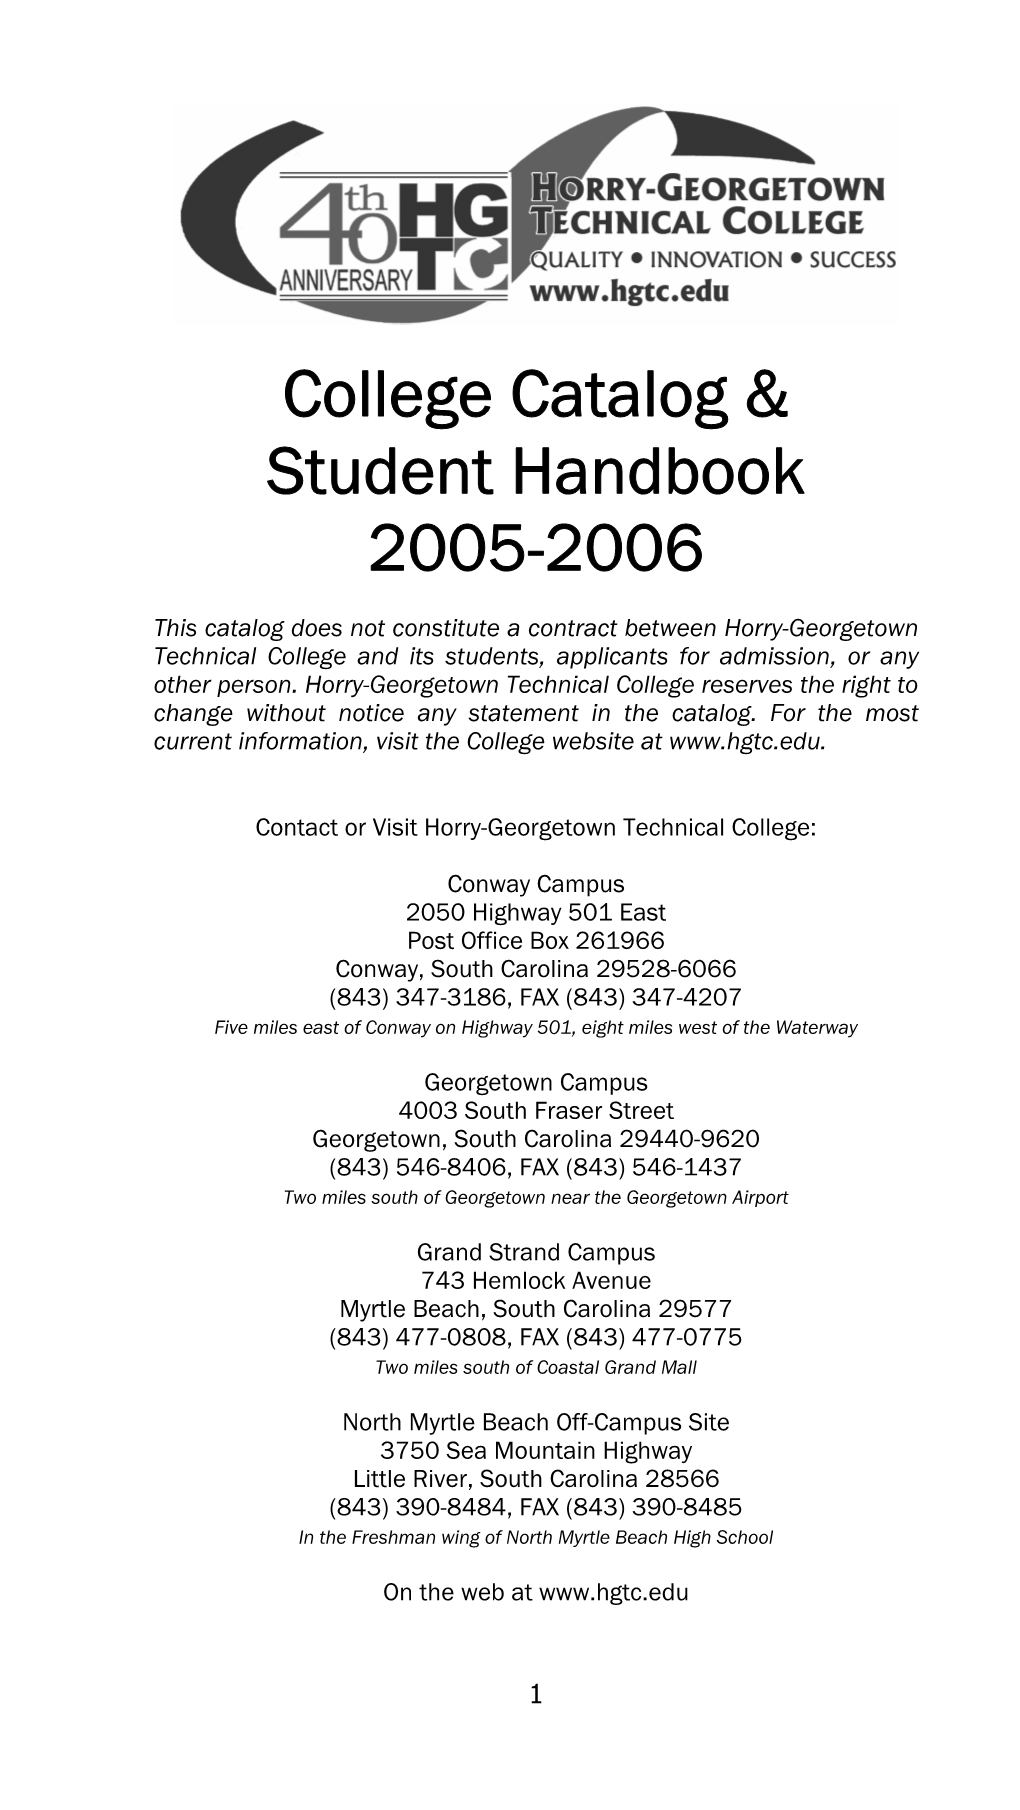 College Catalog & Student Handbook 2005-2006